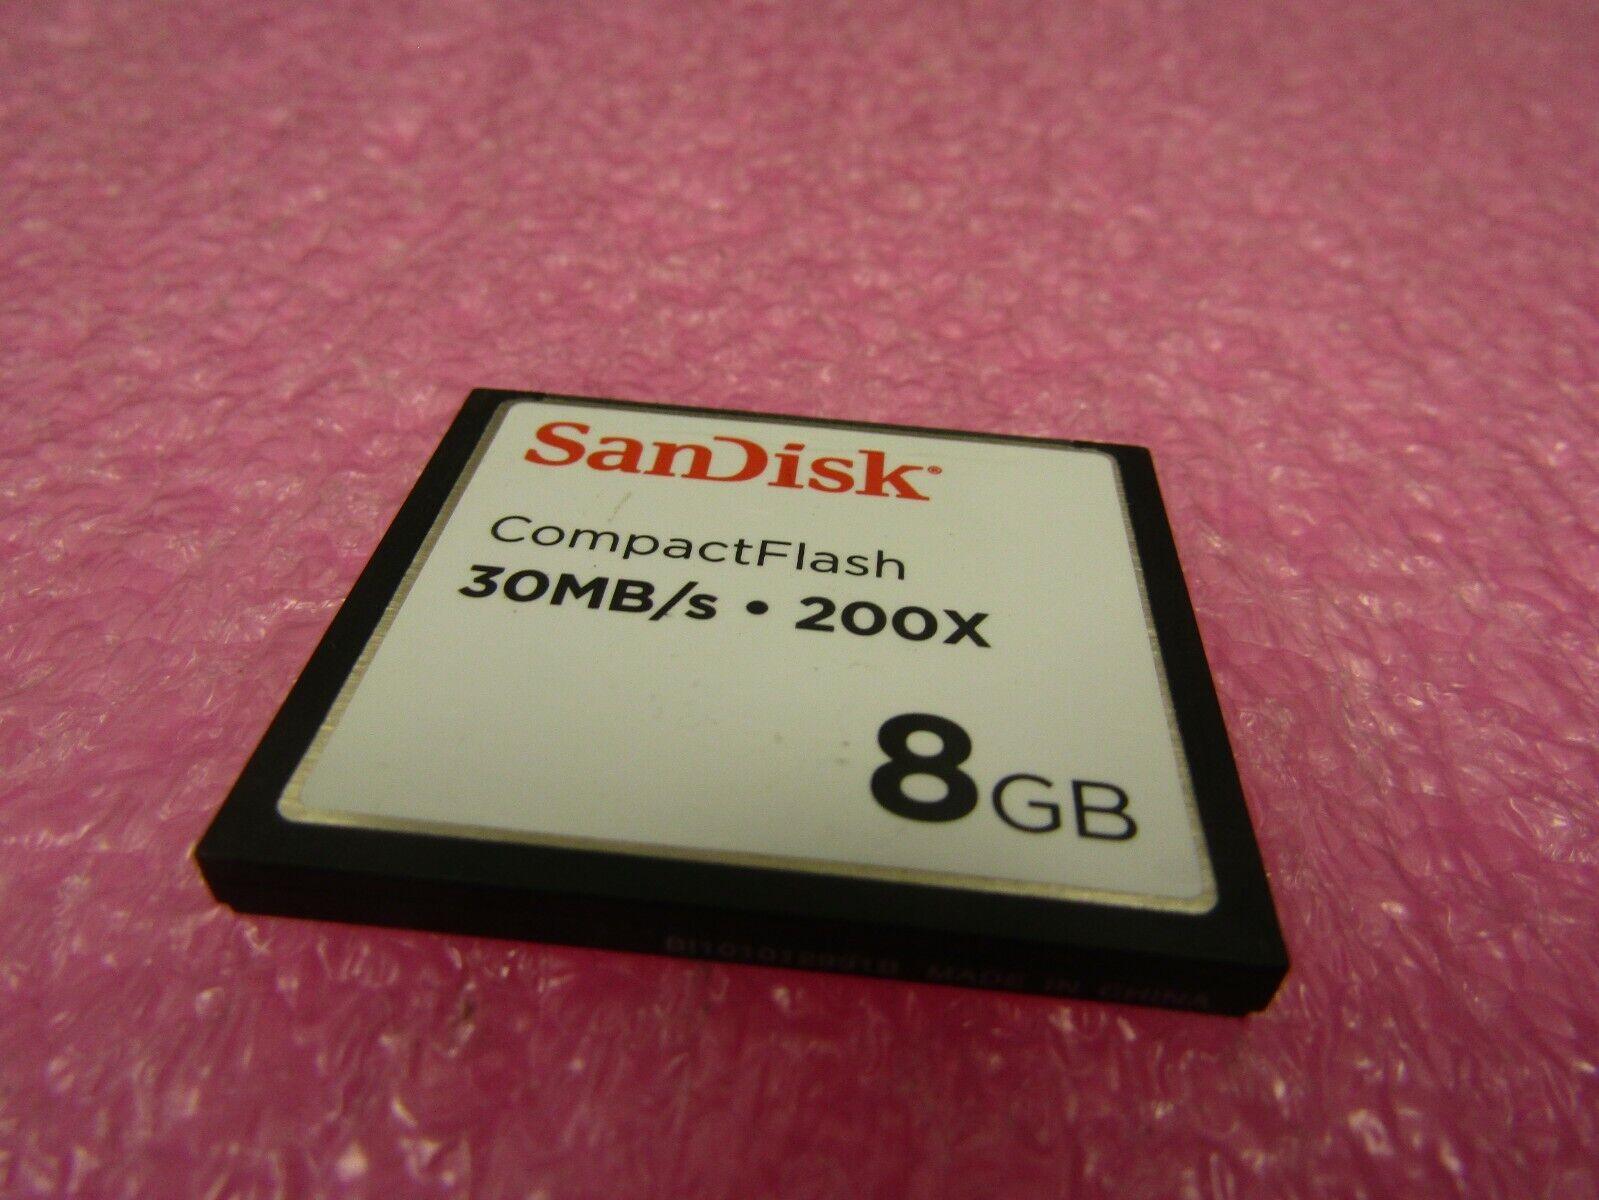 SANDISK COMPACTFLASH	SANDISK	SANDISK COMPACTFLASH 30MB/S 200X 8GB